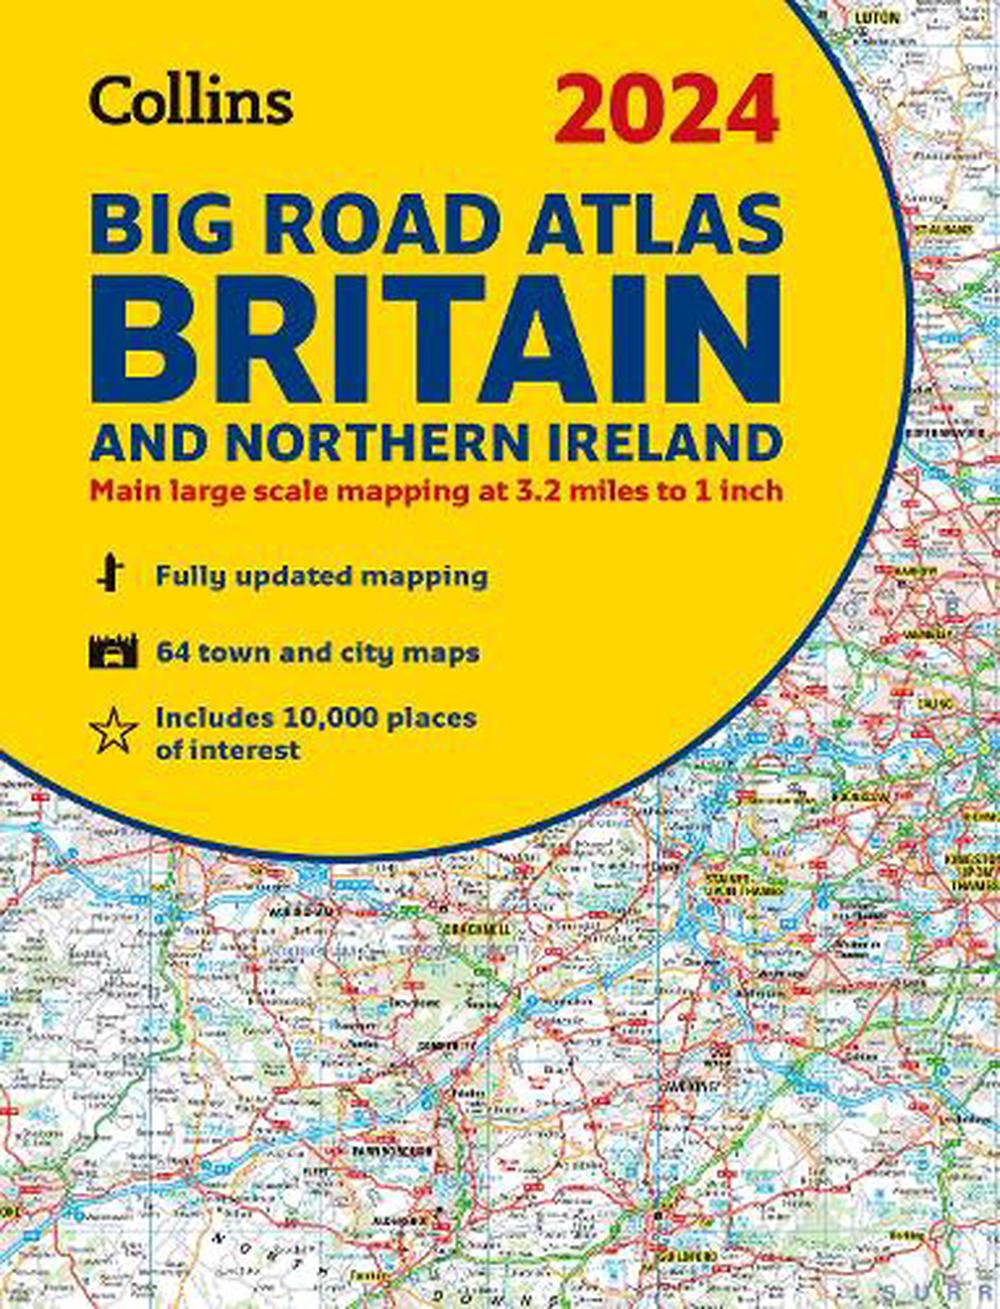 2024 Collins Big Road Atlas Britain and Northern Ireland by Collins